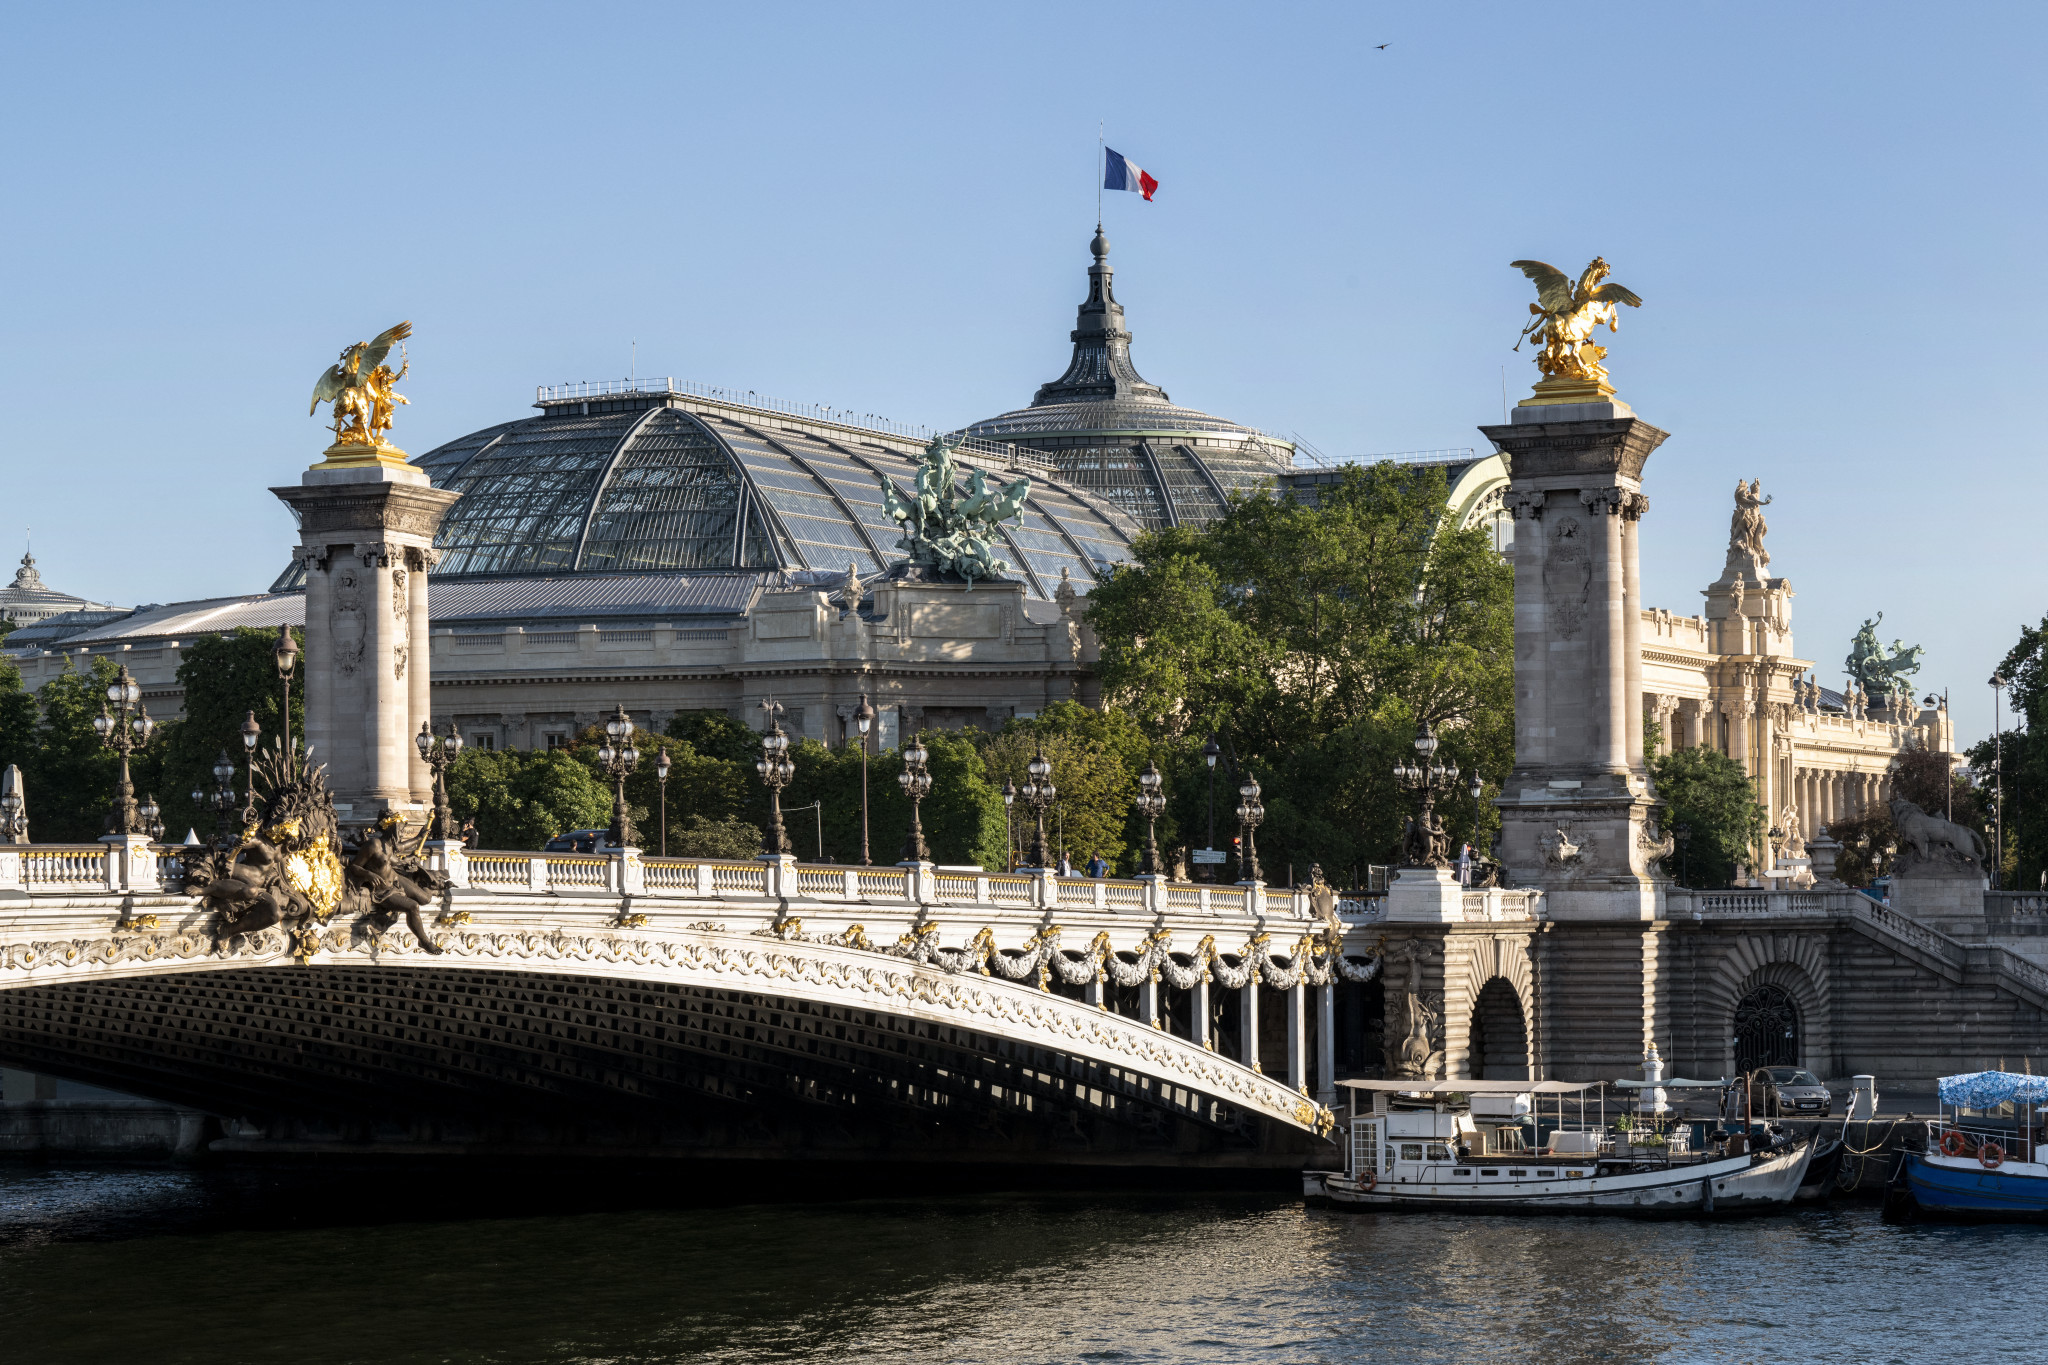 Paris 2024 Chefs de Mission take tour of venues and air concerns in seminars